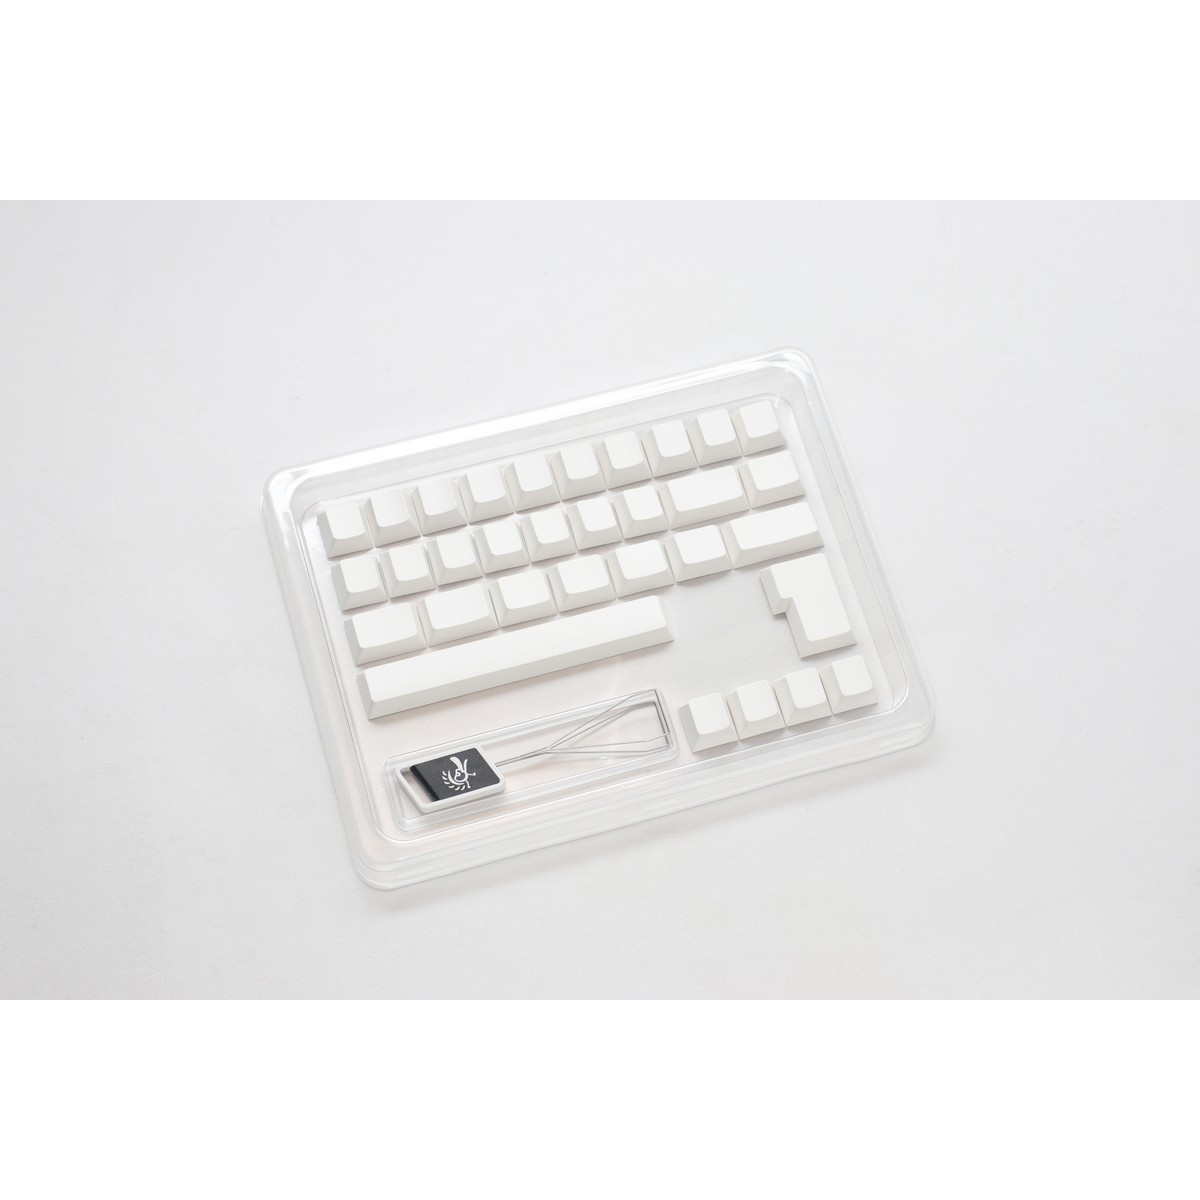 Ducky - Ducky 132 Key Cherry Profile Keycaps ANSI/ISO Layout - Blank white